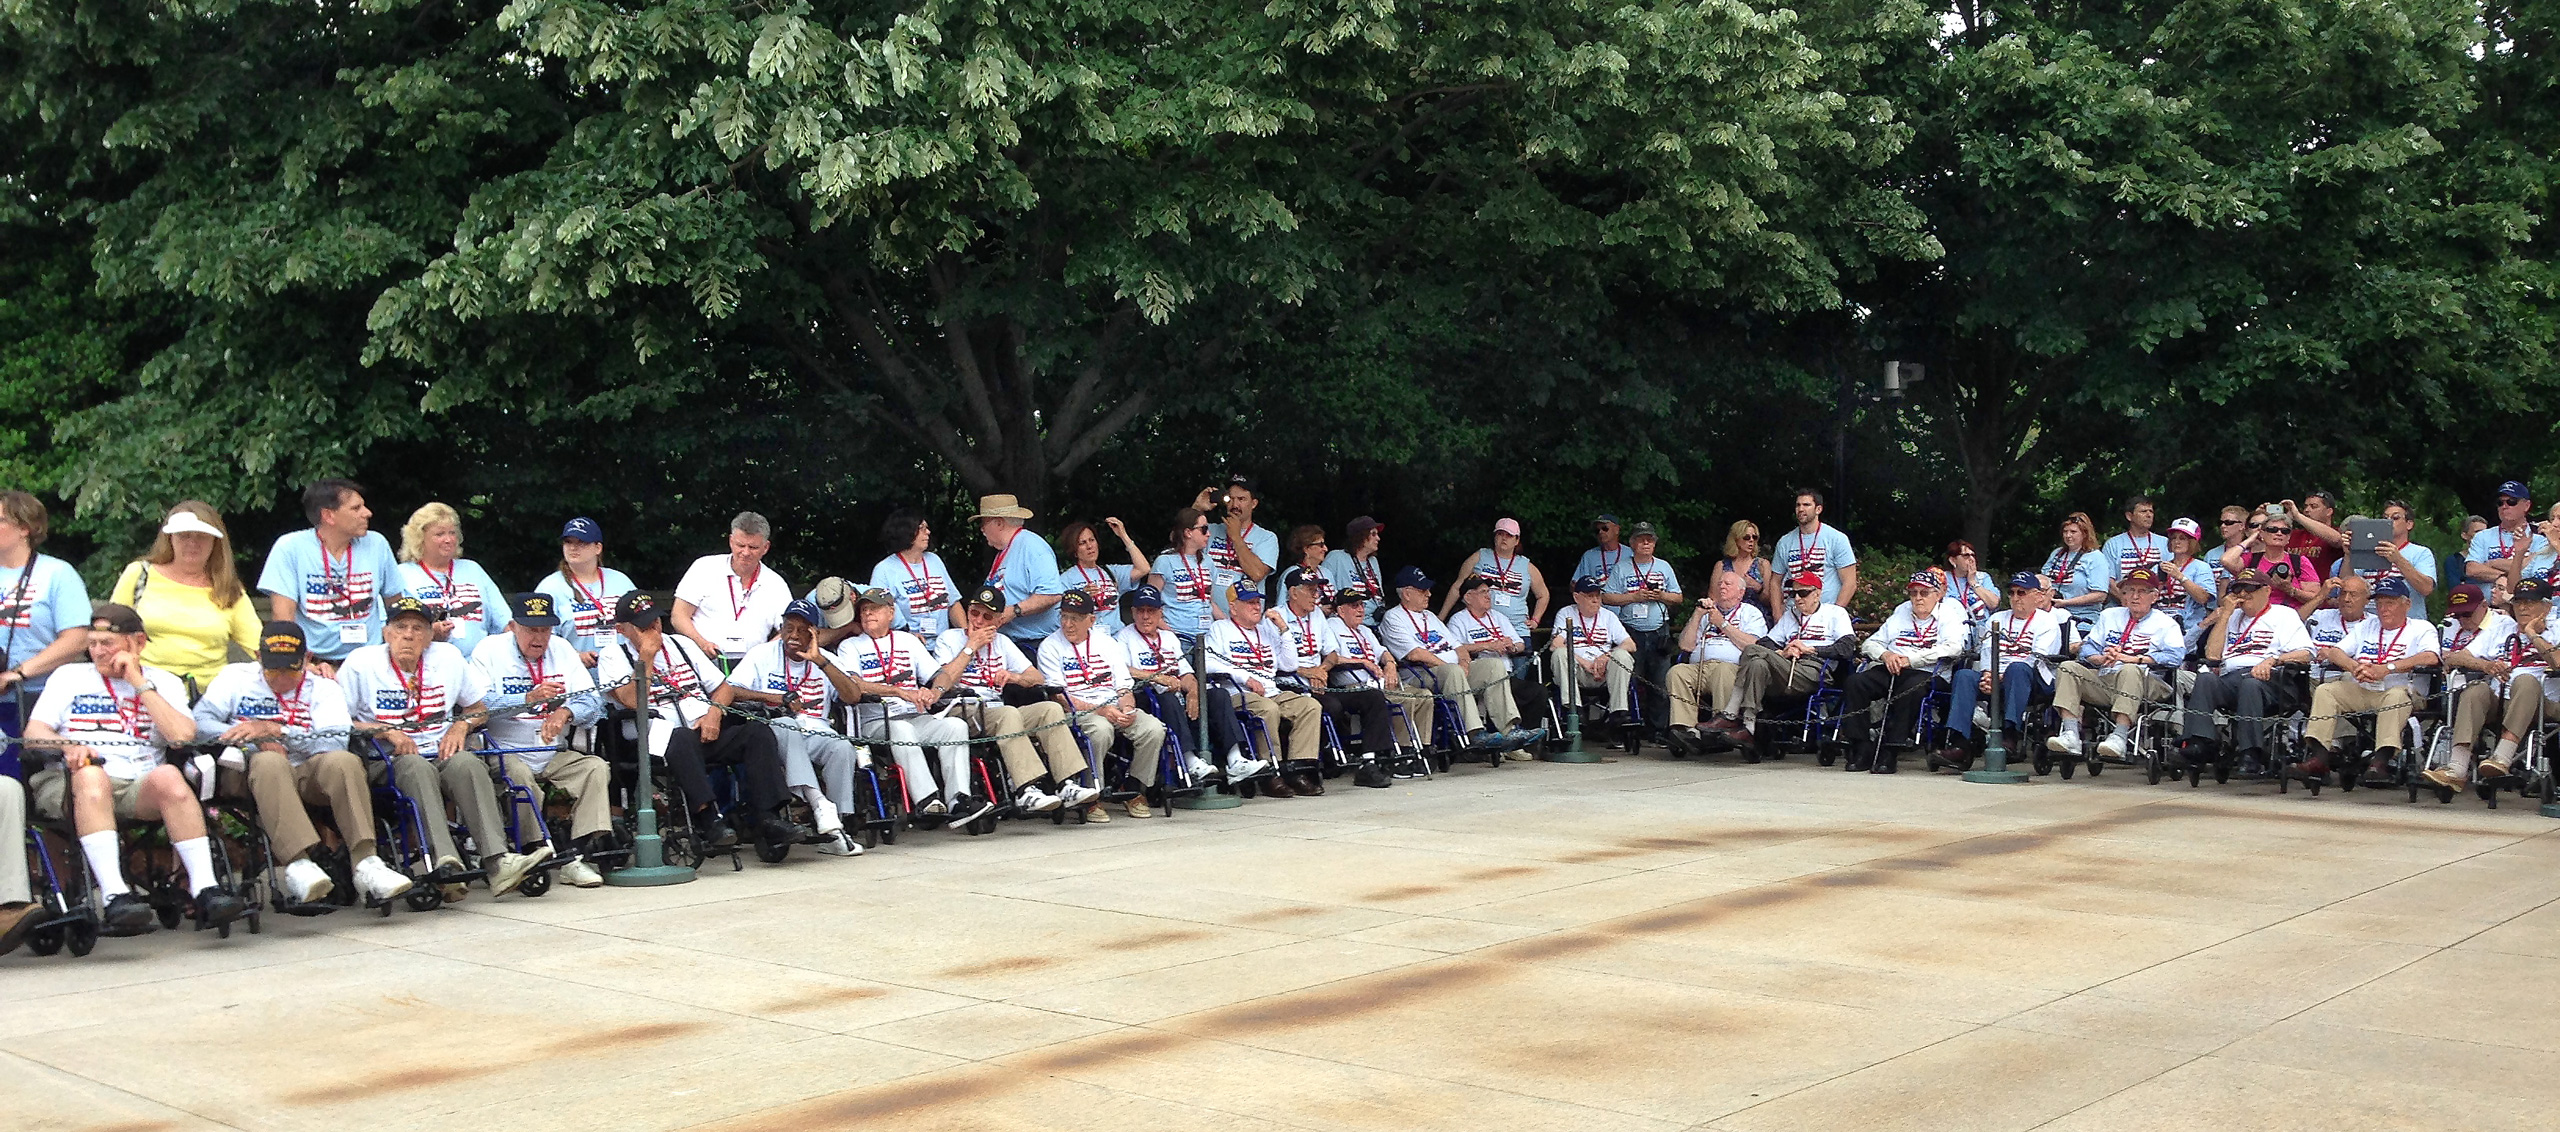 Honor Flight New England veterans in Washington D.C. on May 17, 2015. (Photo: MVRsimulation)